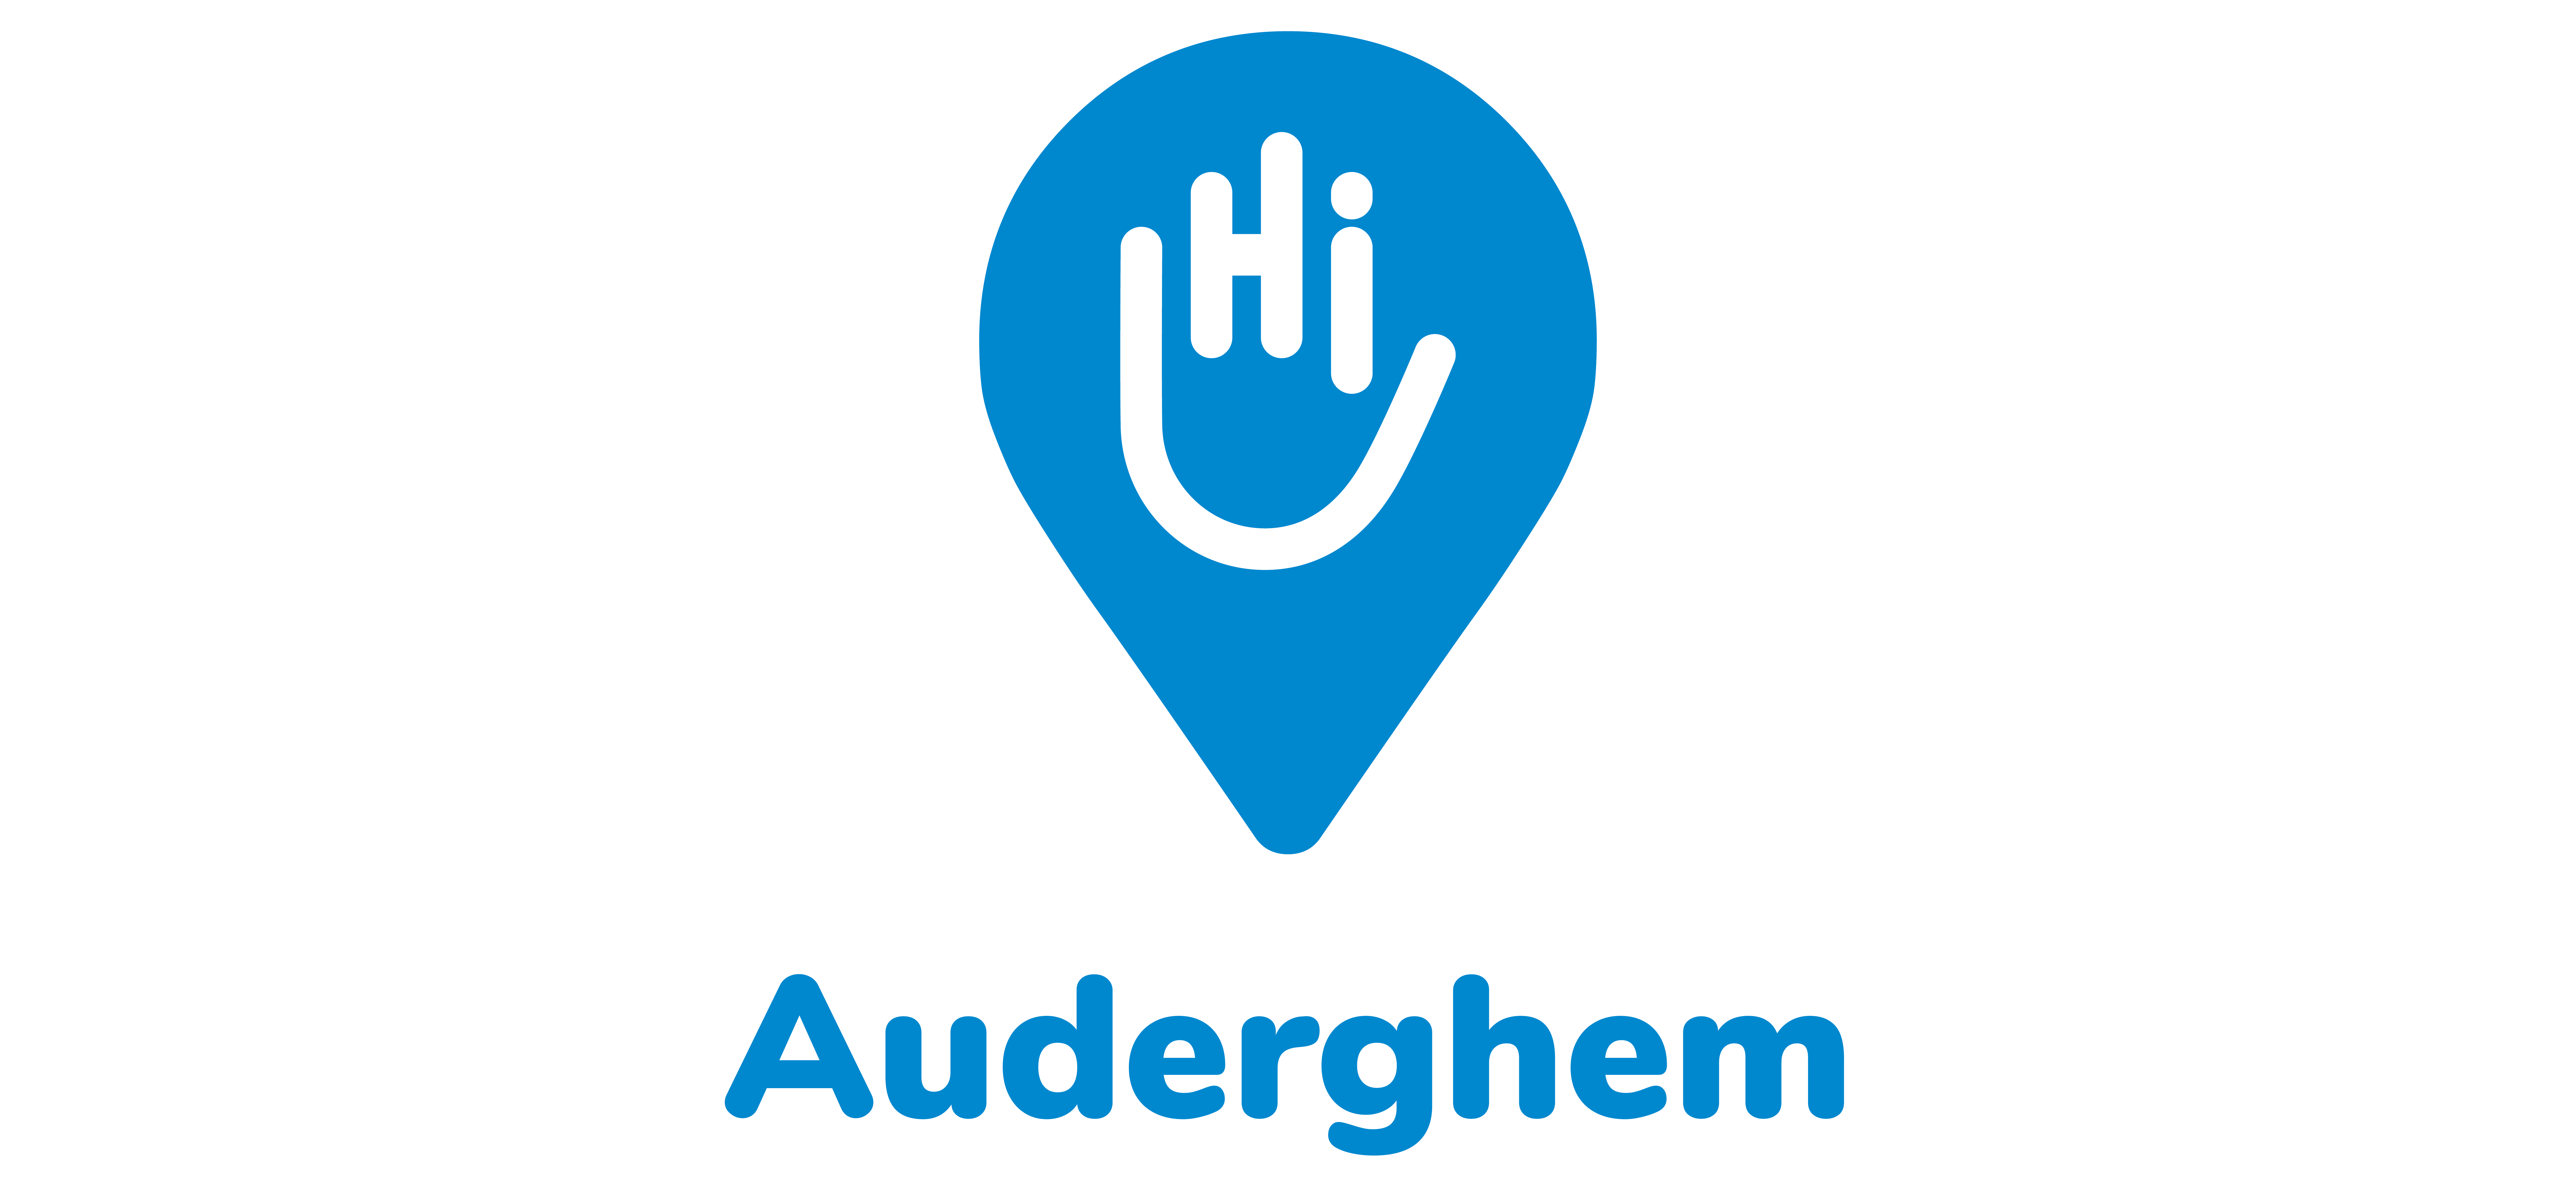 Visuel de localisation Auderghem